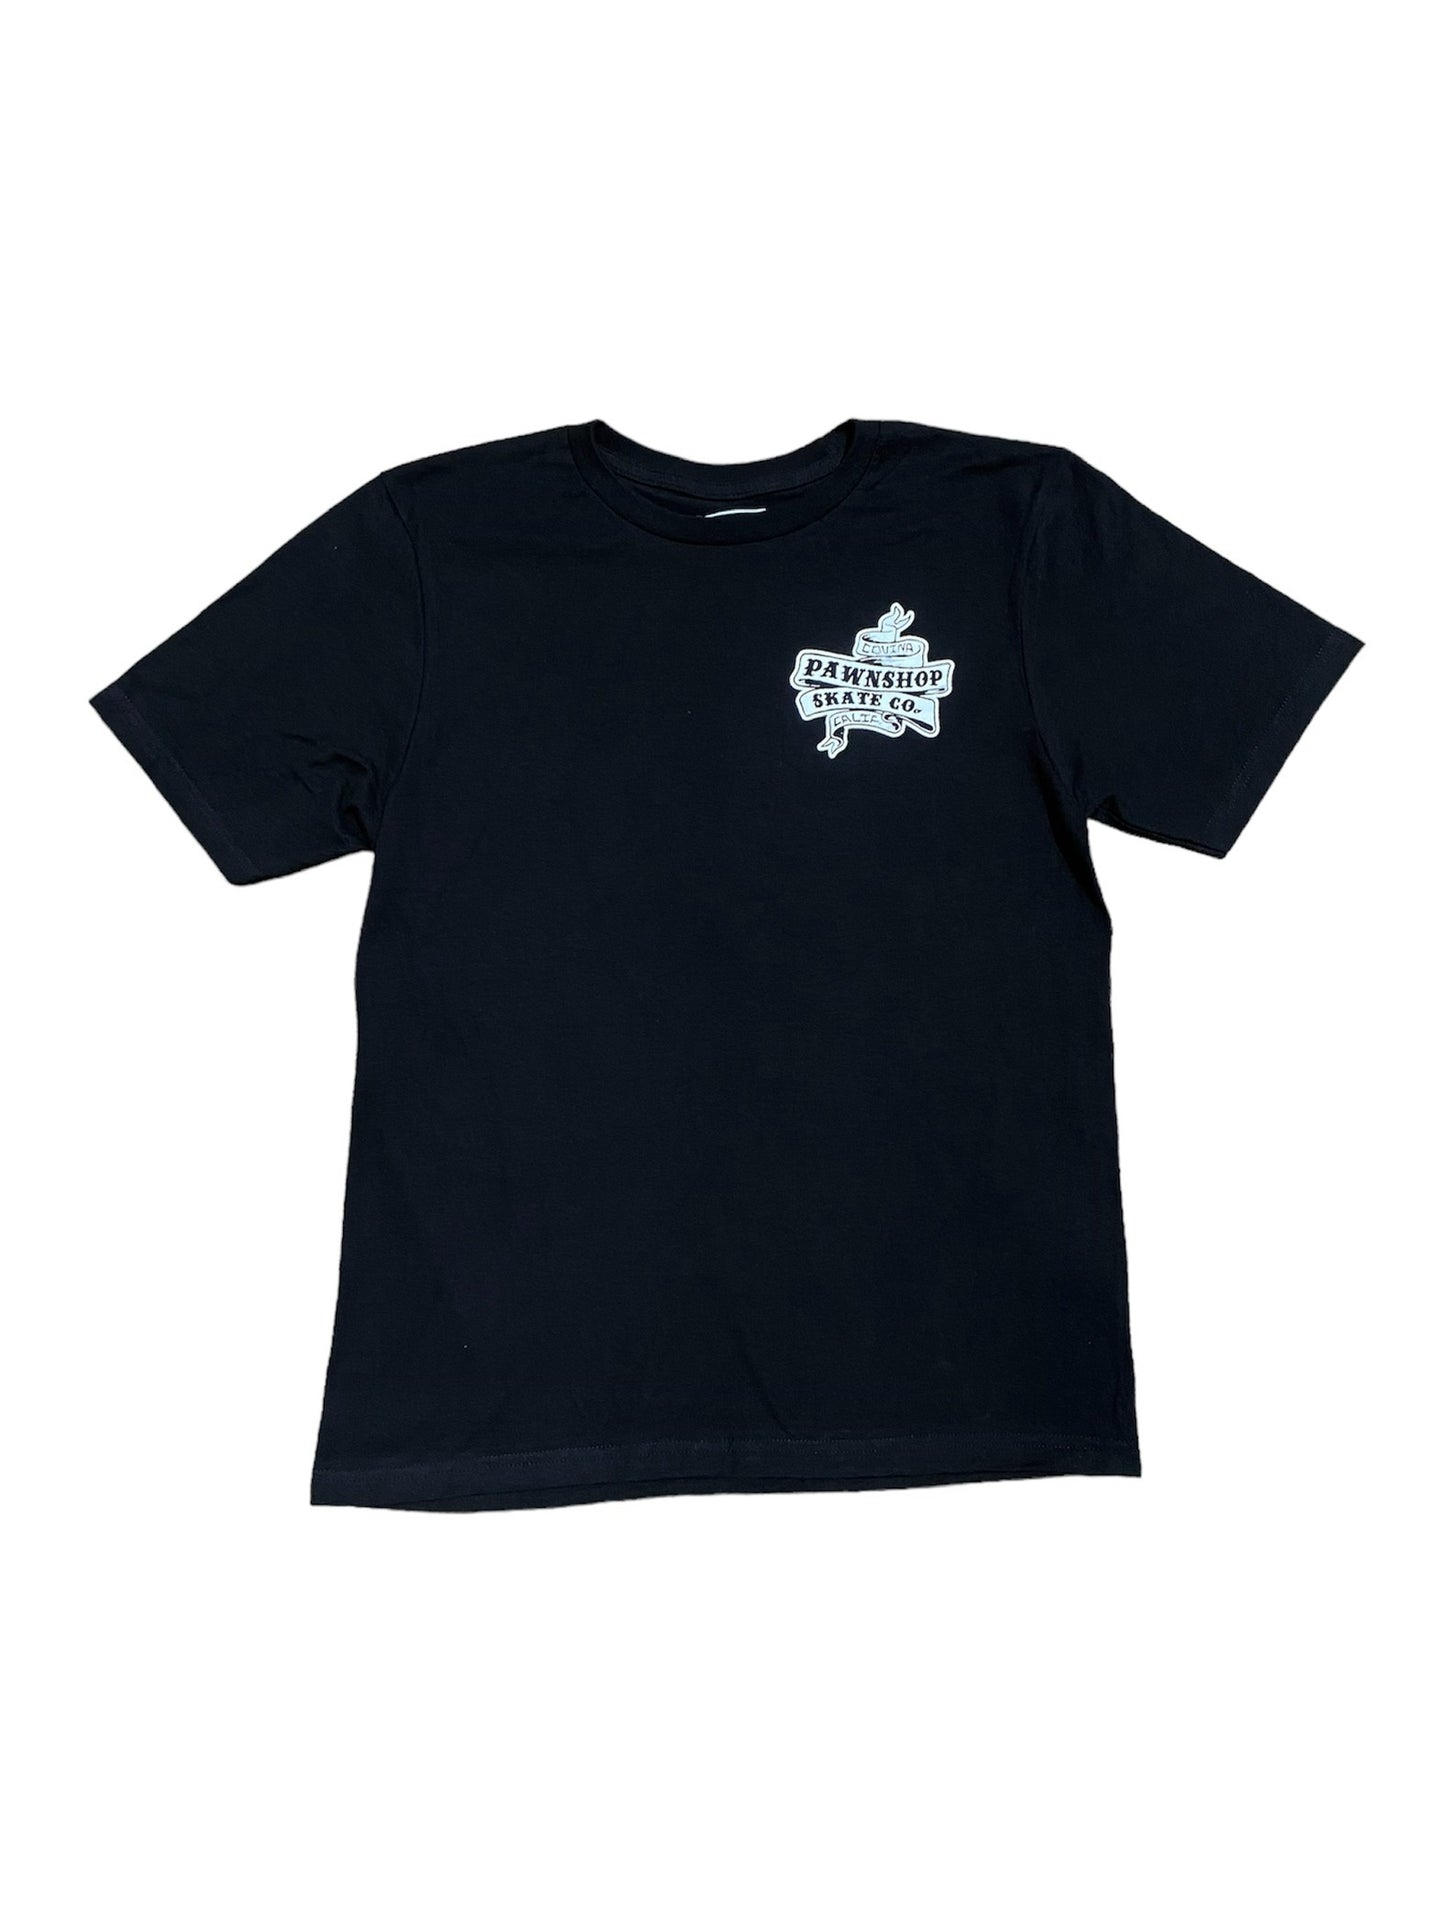 Pawnshop Service & Supply (Youth) Tee Shirt